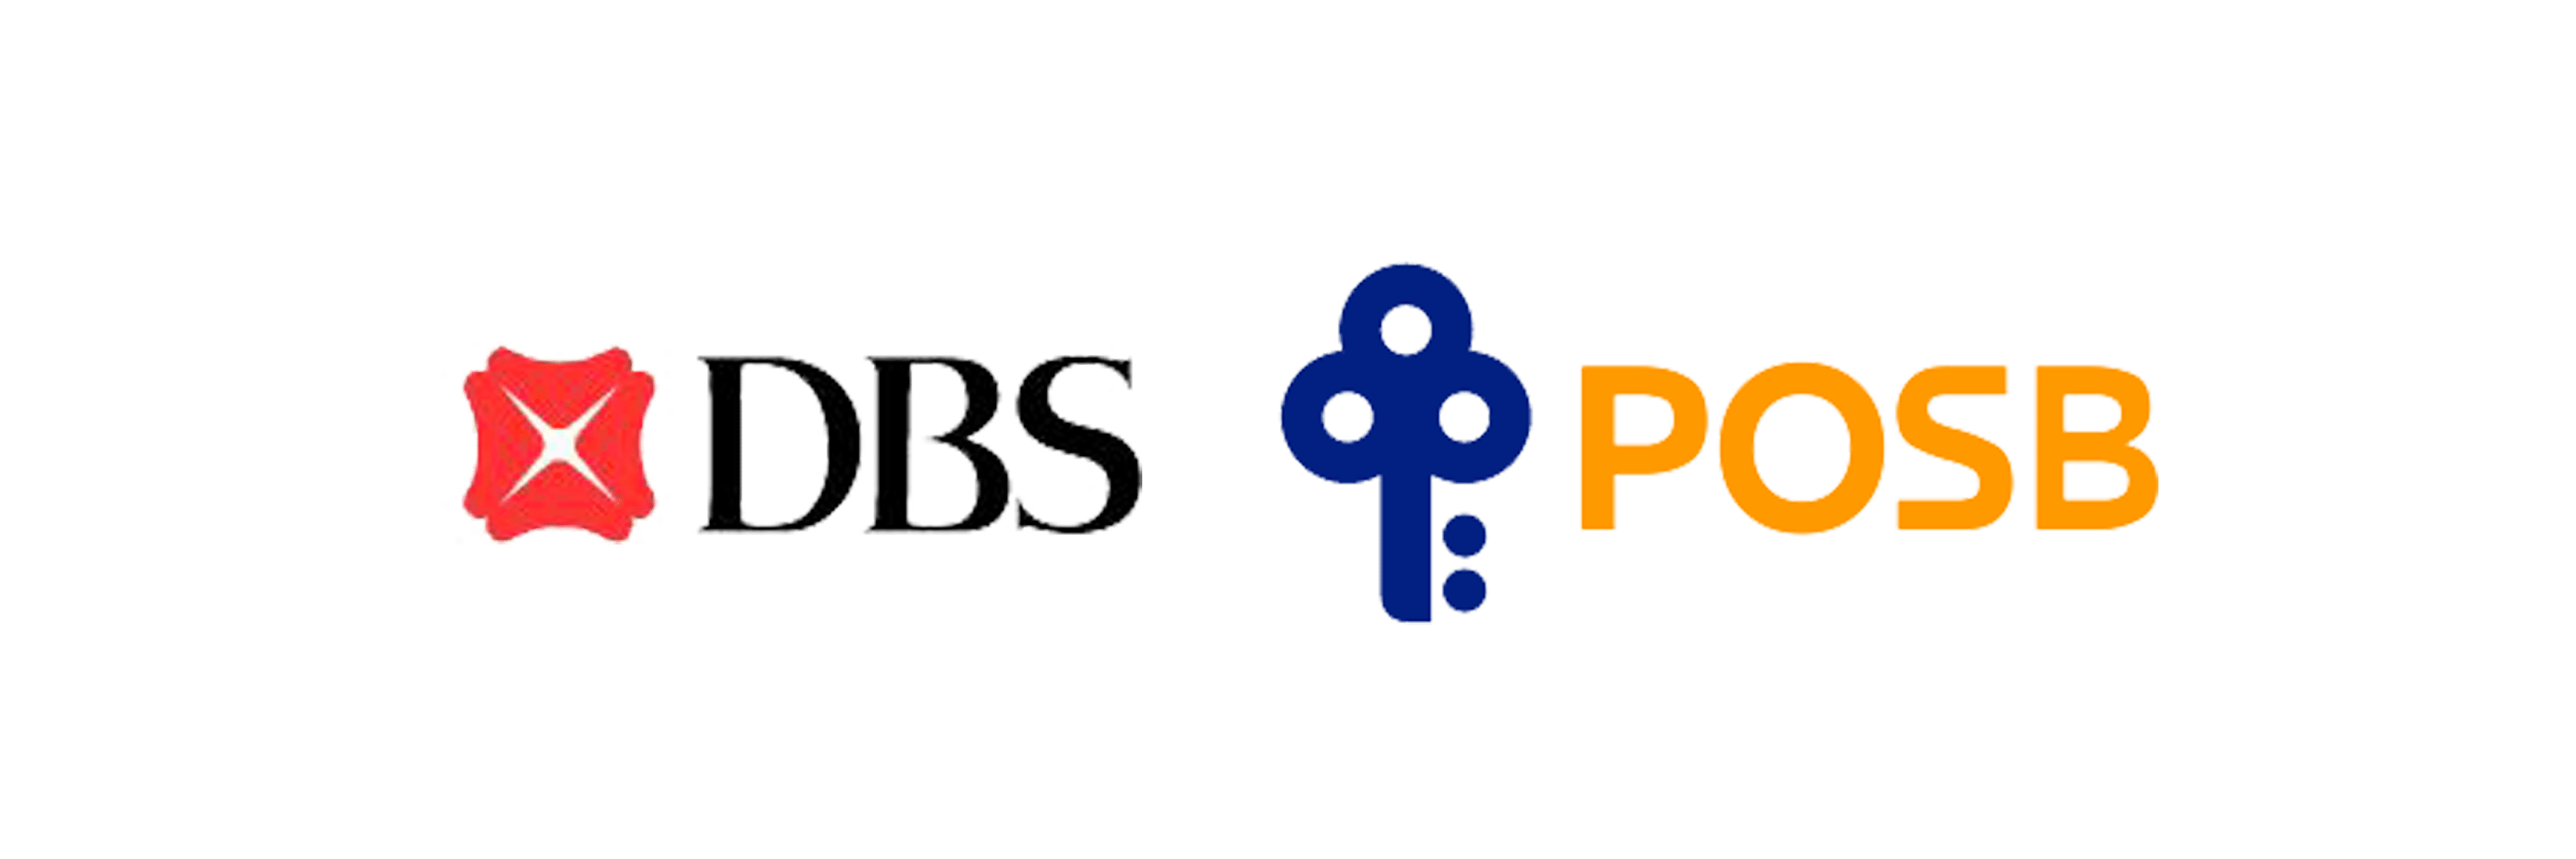 DBS POSB logo V1 - Instalment Plans